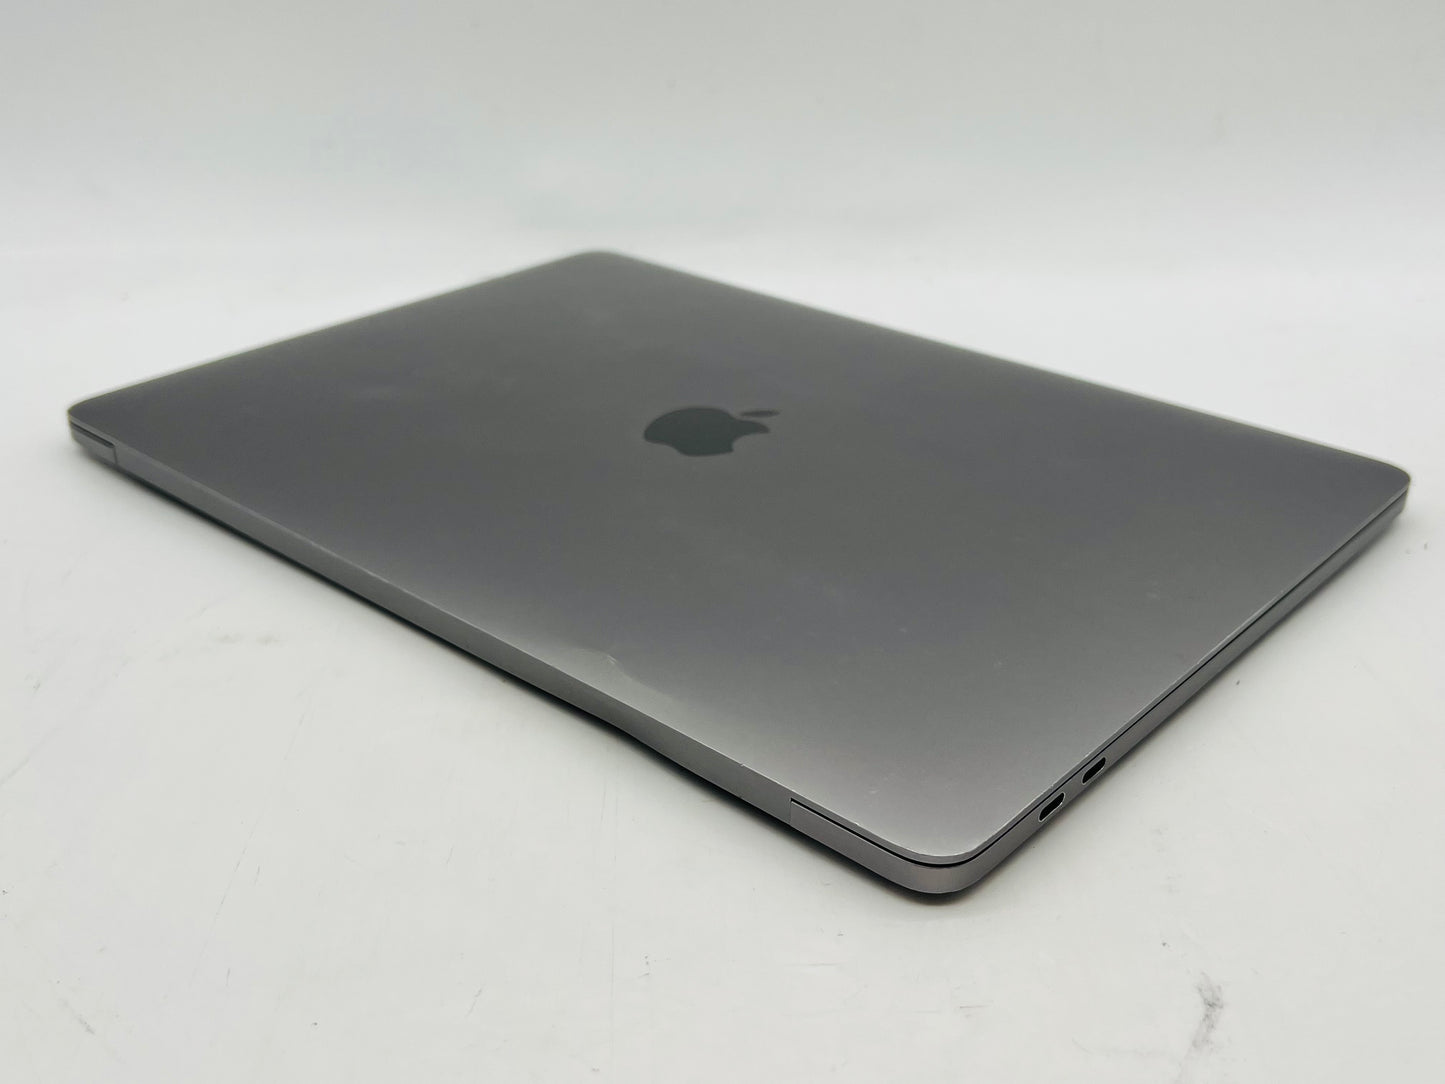 Apple 2019 MacBook Pro 13 in TB 2.4GHz i5 16GB RAM 256GB SSD IIPG655 - Good